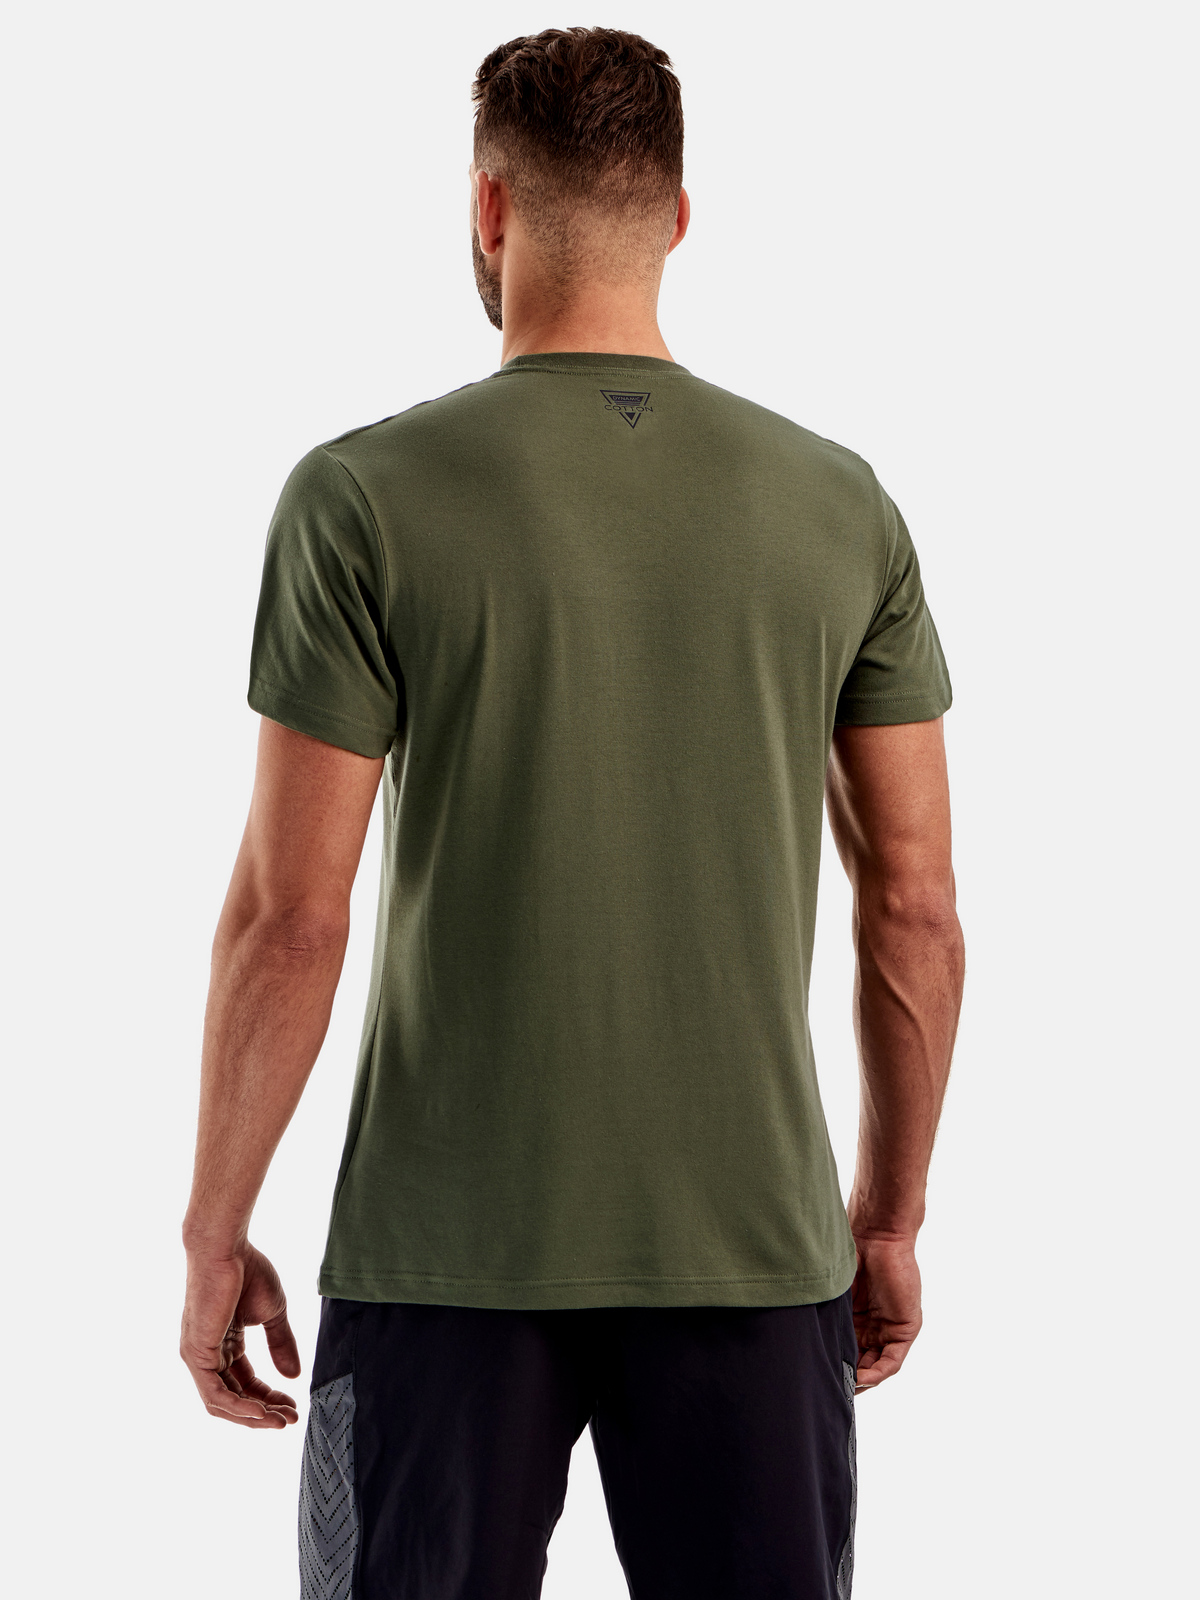 Peresvit Dynamic Cotton Short Sleeve T-shirt Rifle Green, Photo No. 2